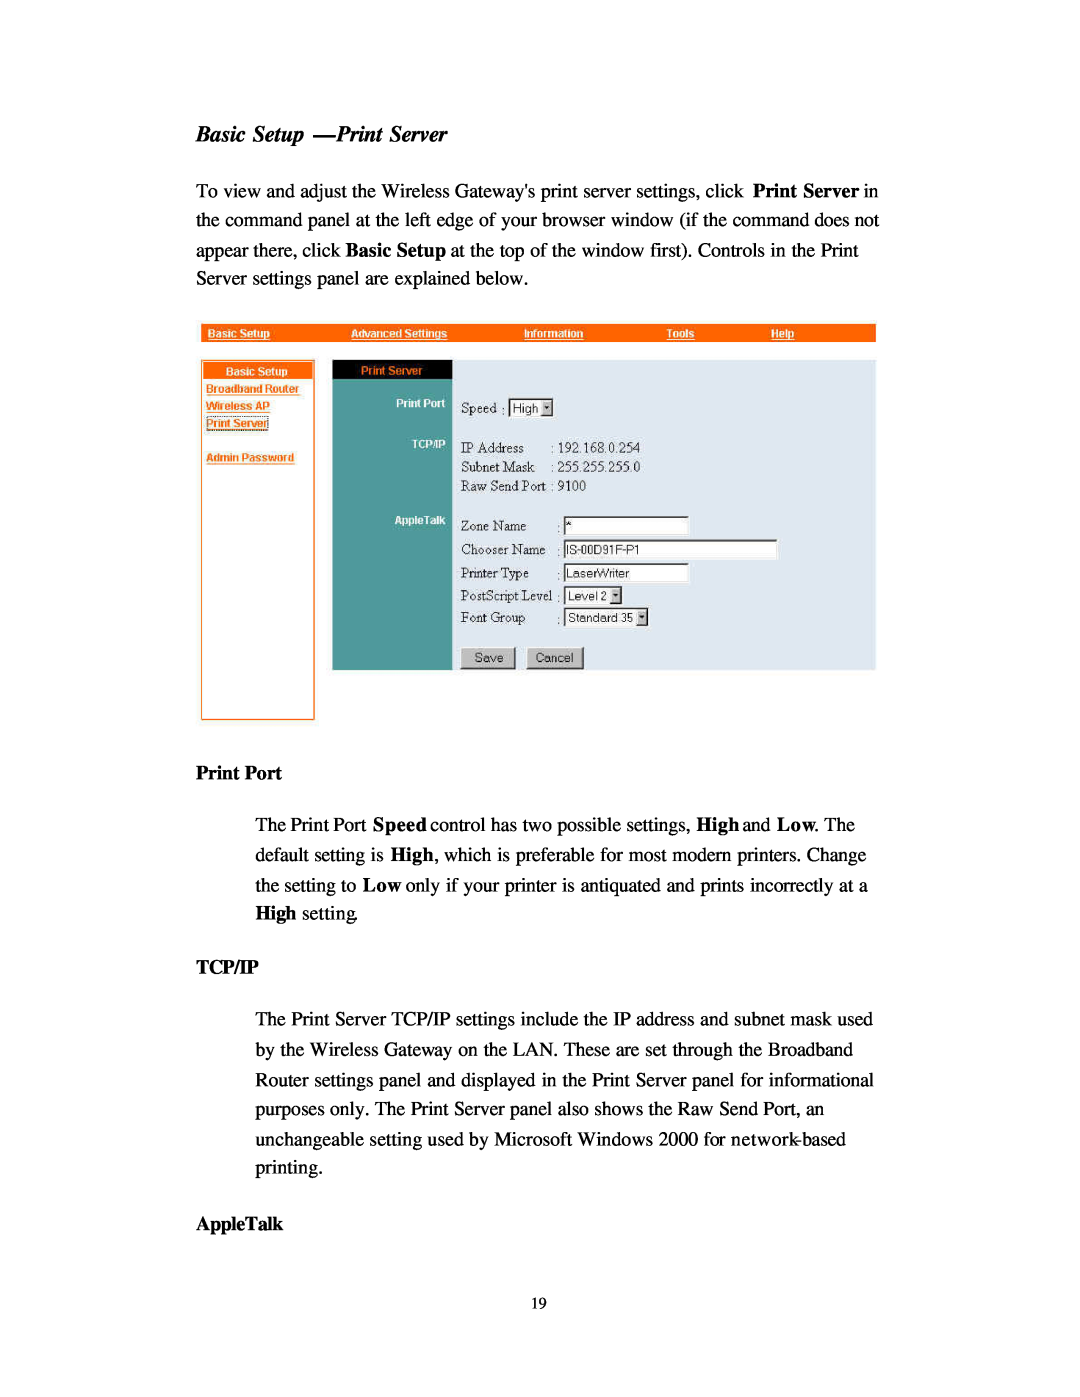 Nlynx Wireless Gateway manual Basic Setup - Print Server, Print Port, Tcp/Ip, AppleTalk 